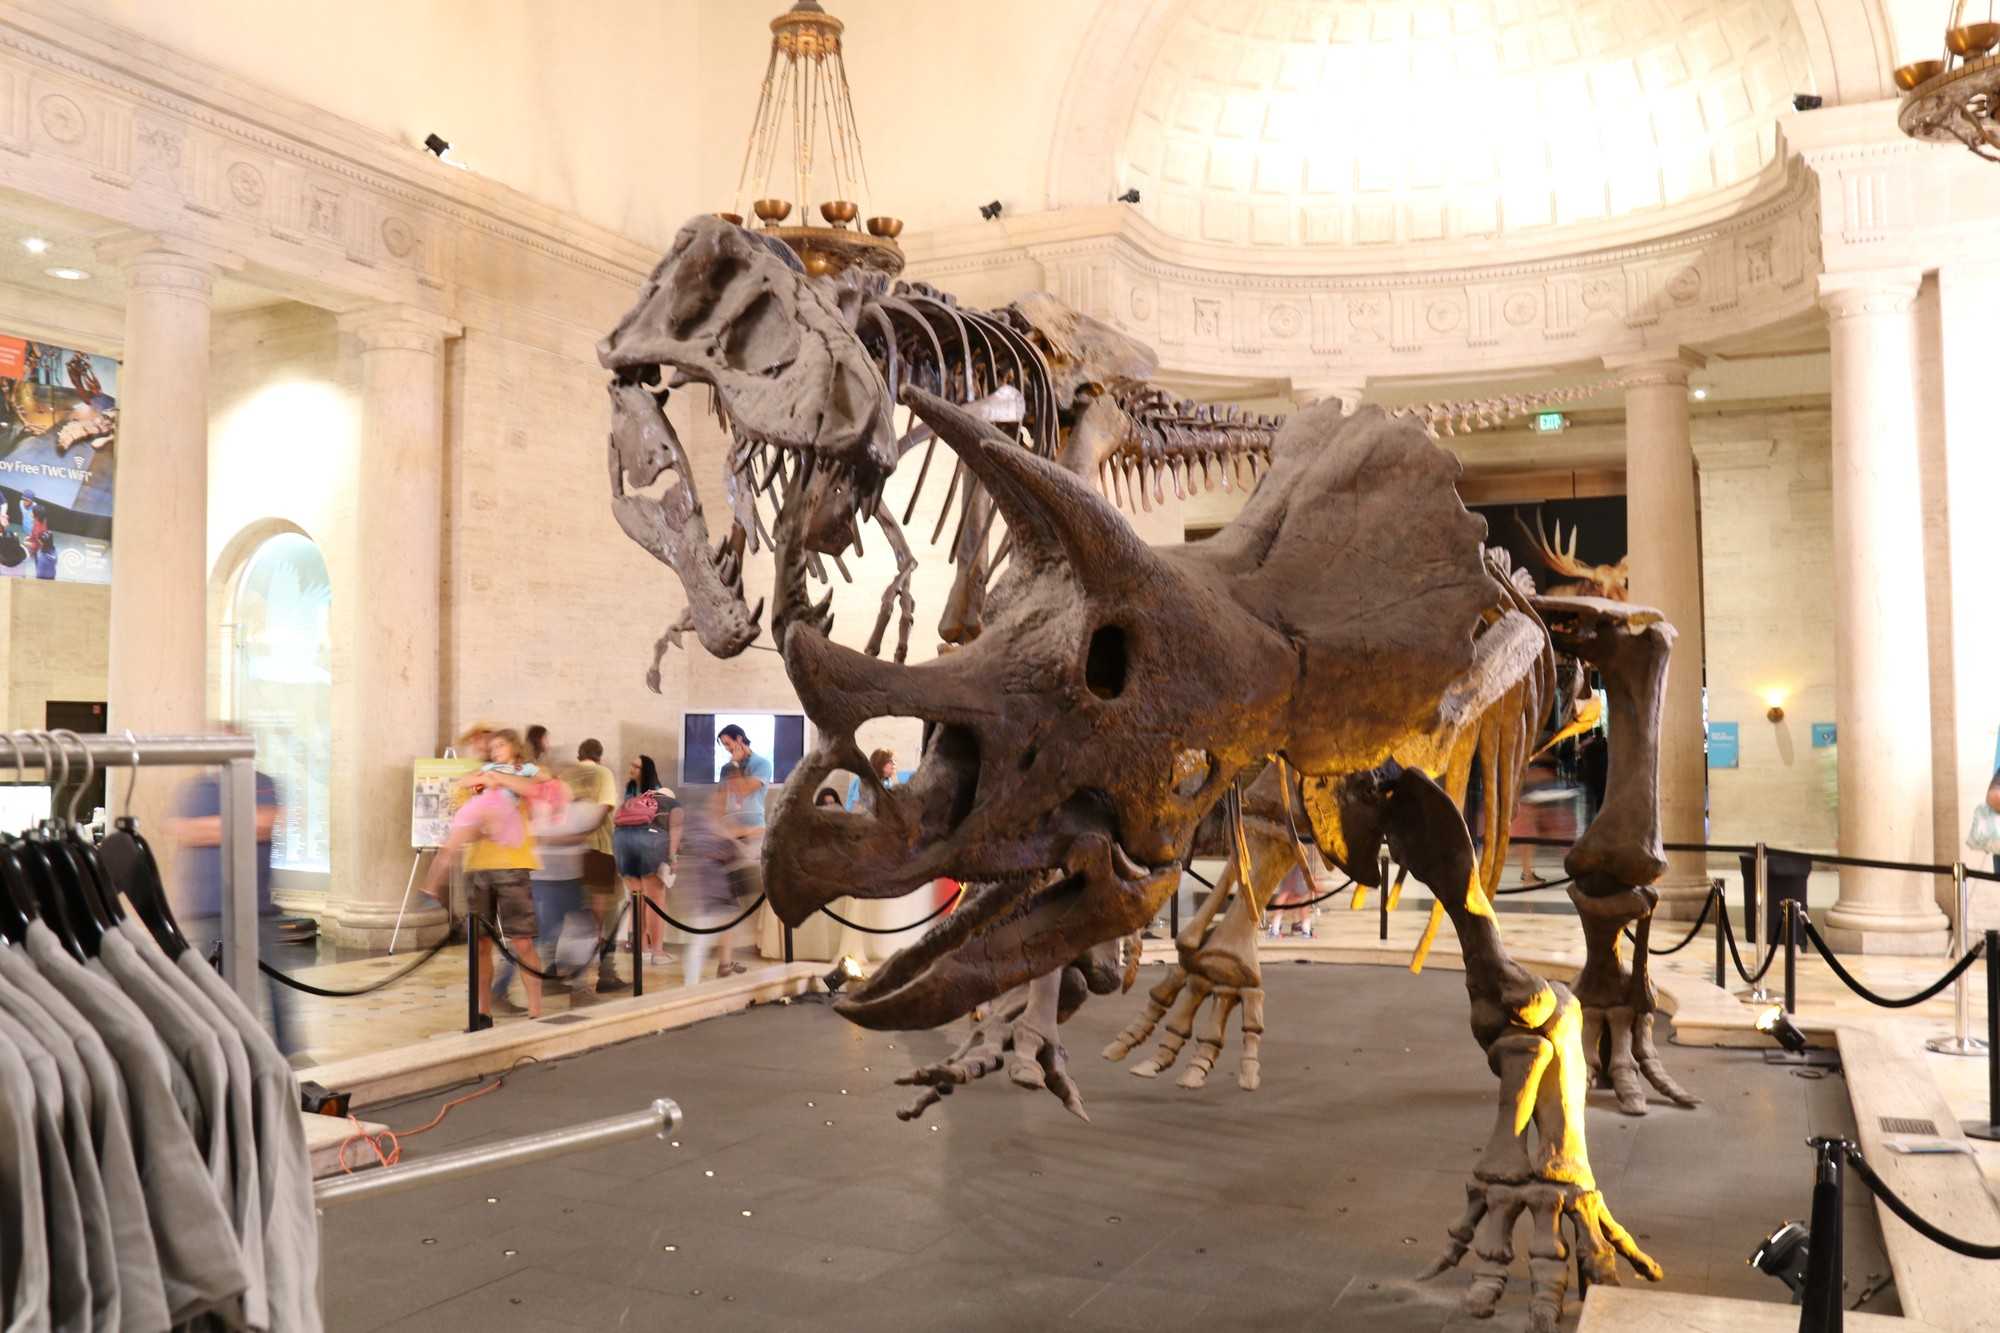 Dinosaur+skull+displayed+in+museum